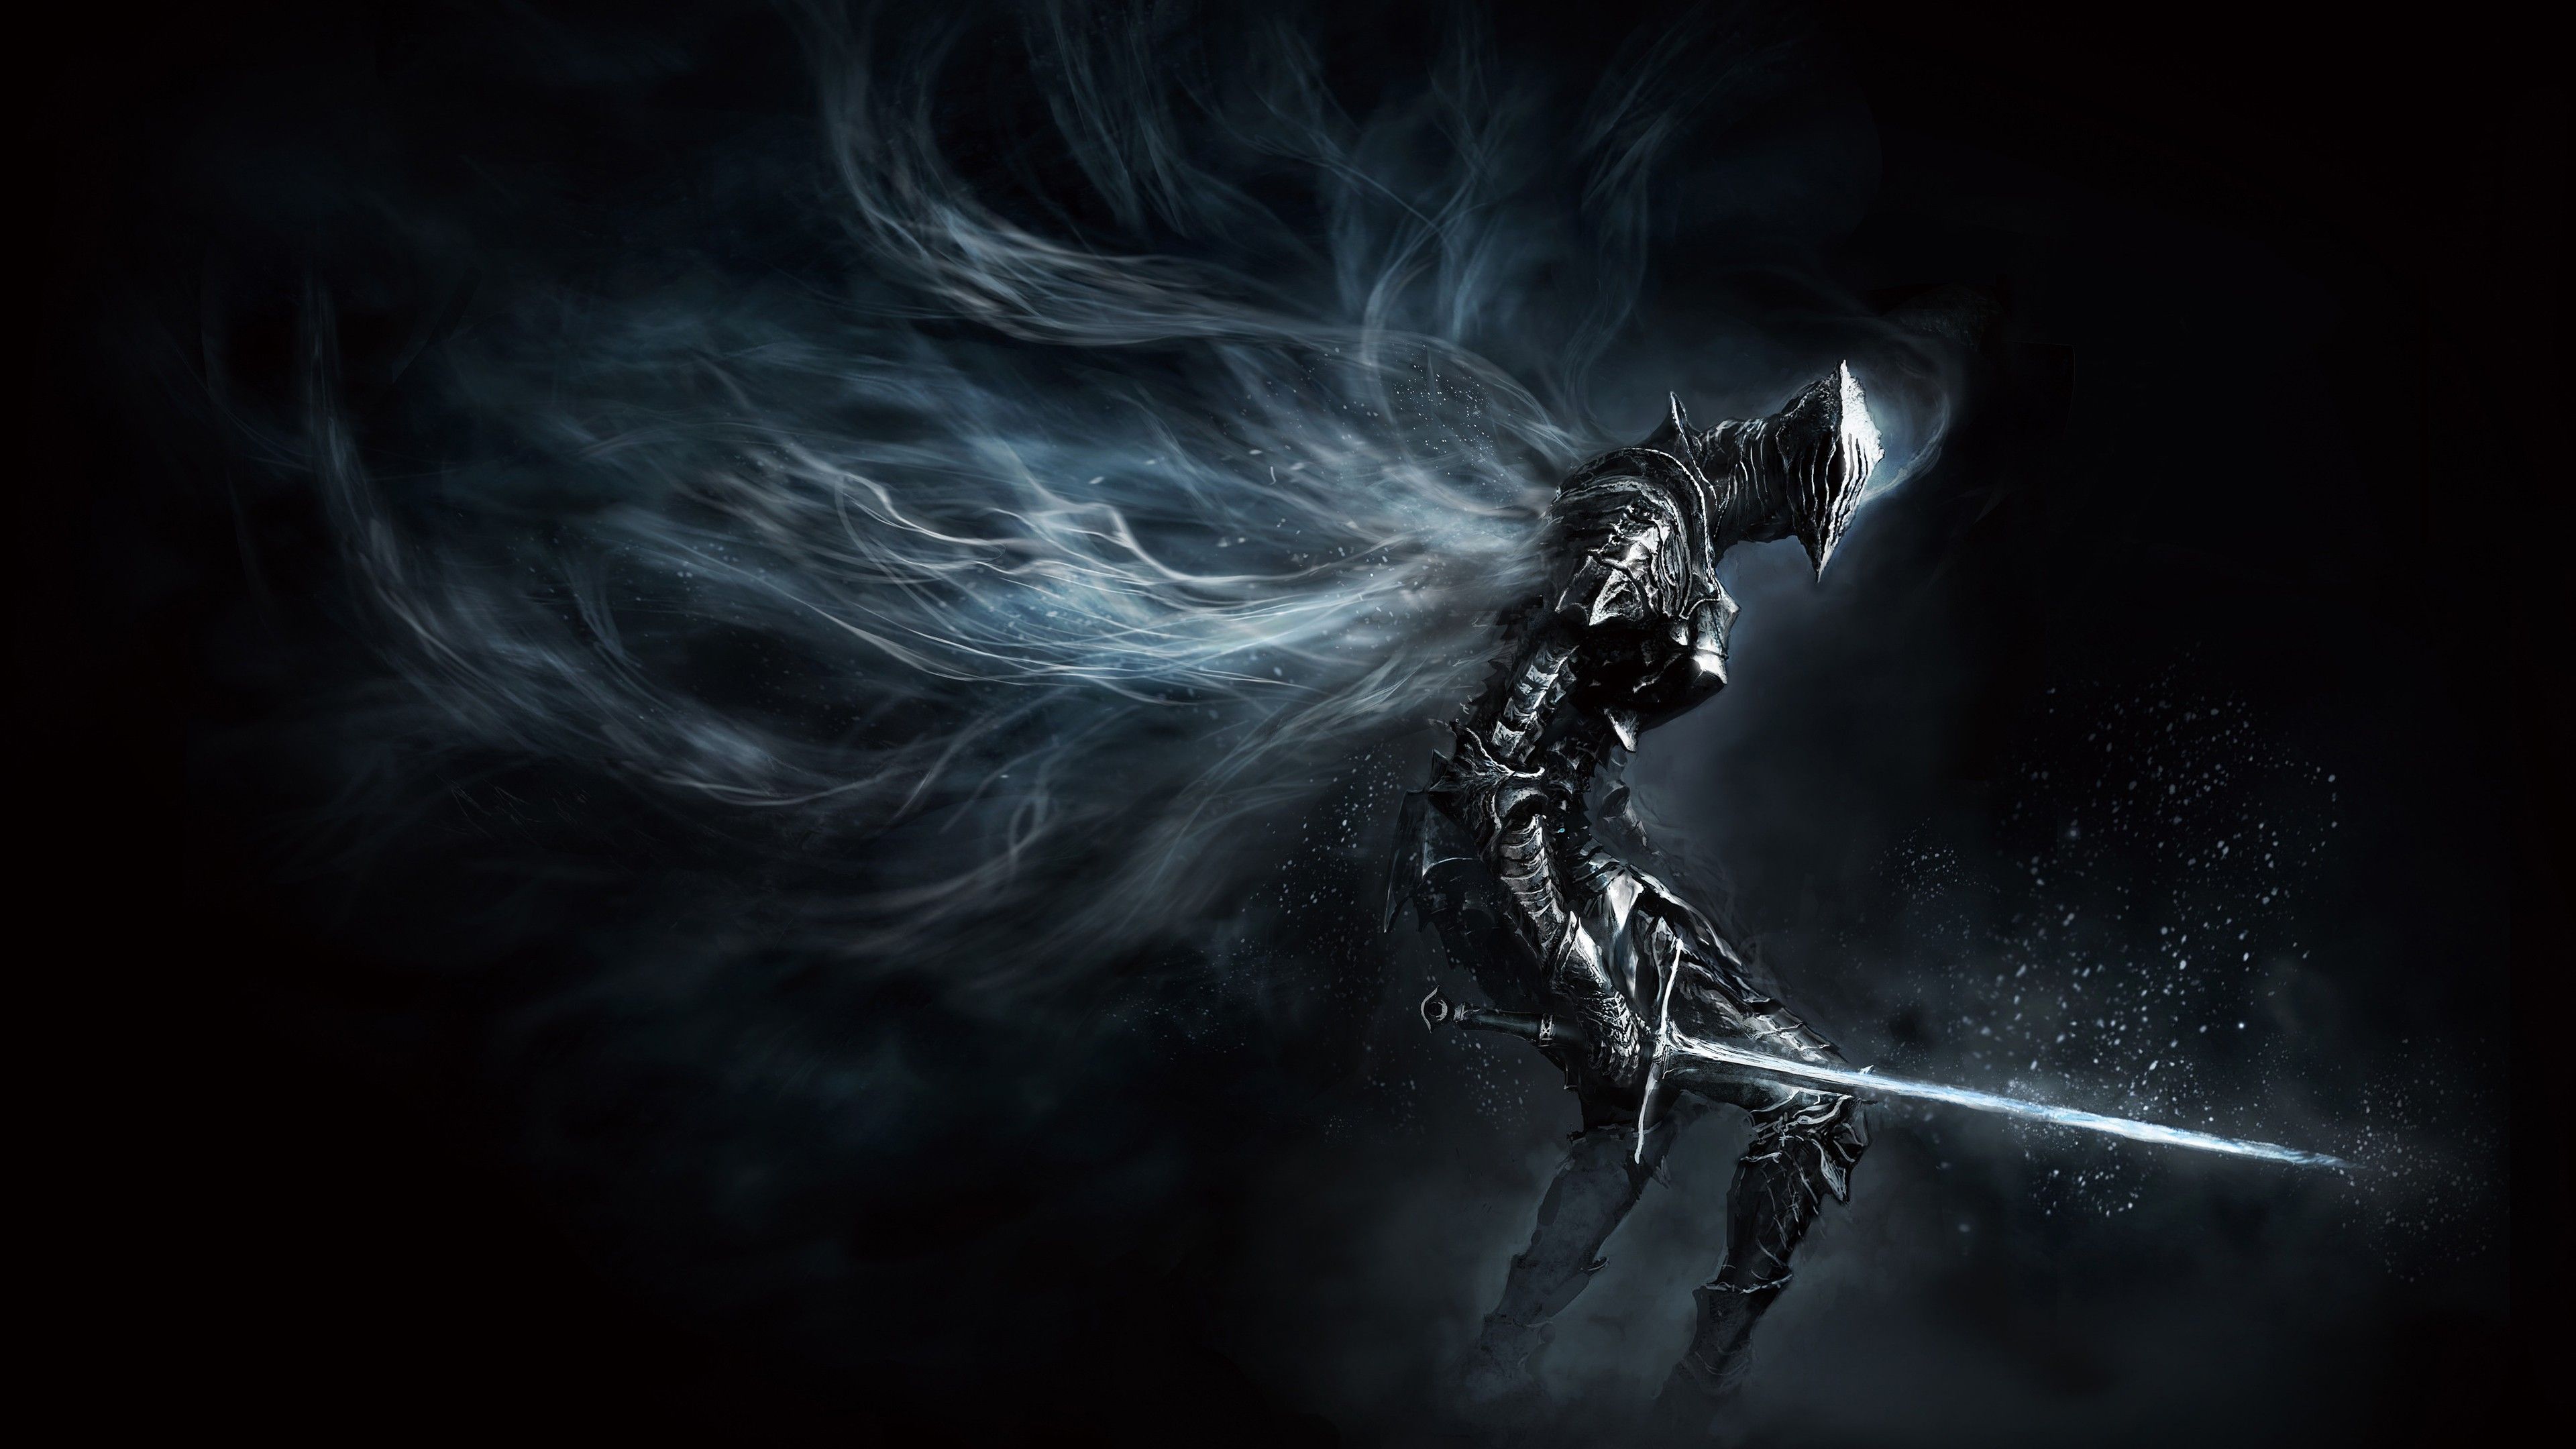 Dark Souls 3 HD Wallpaper